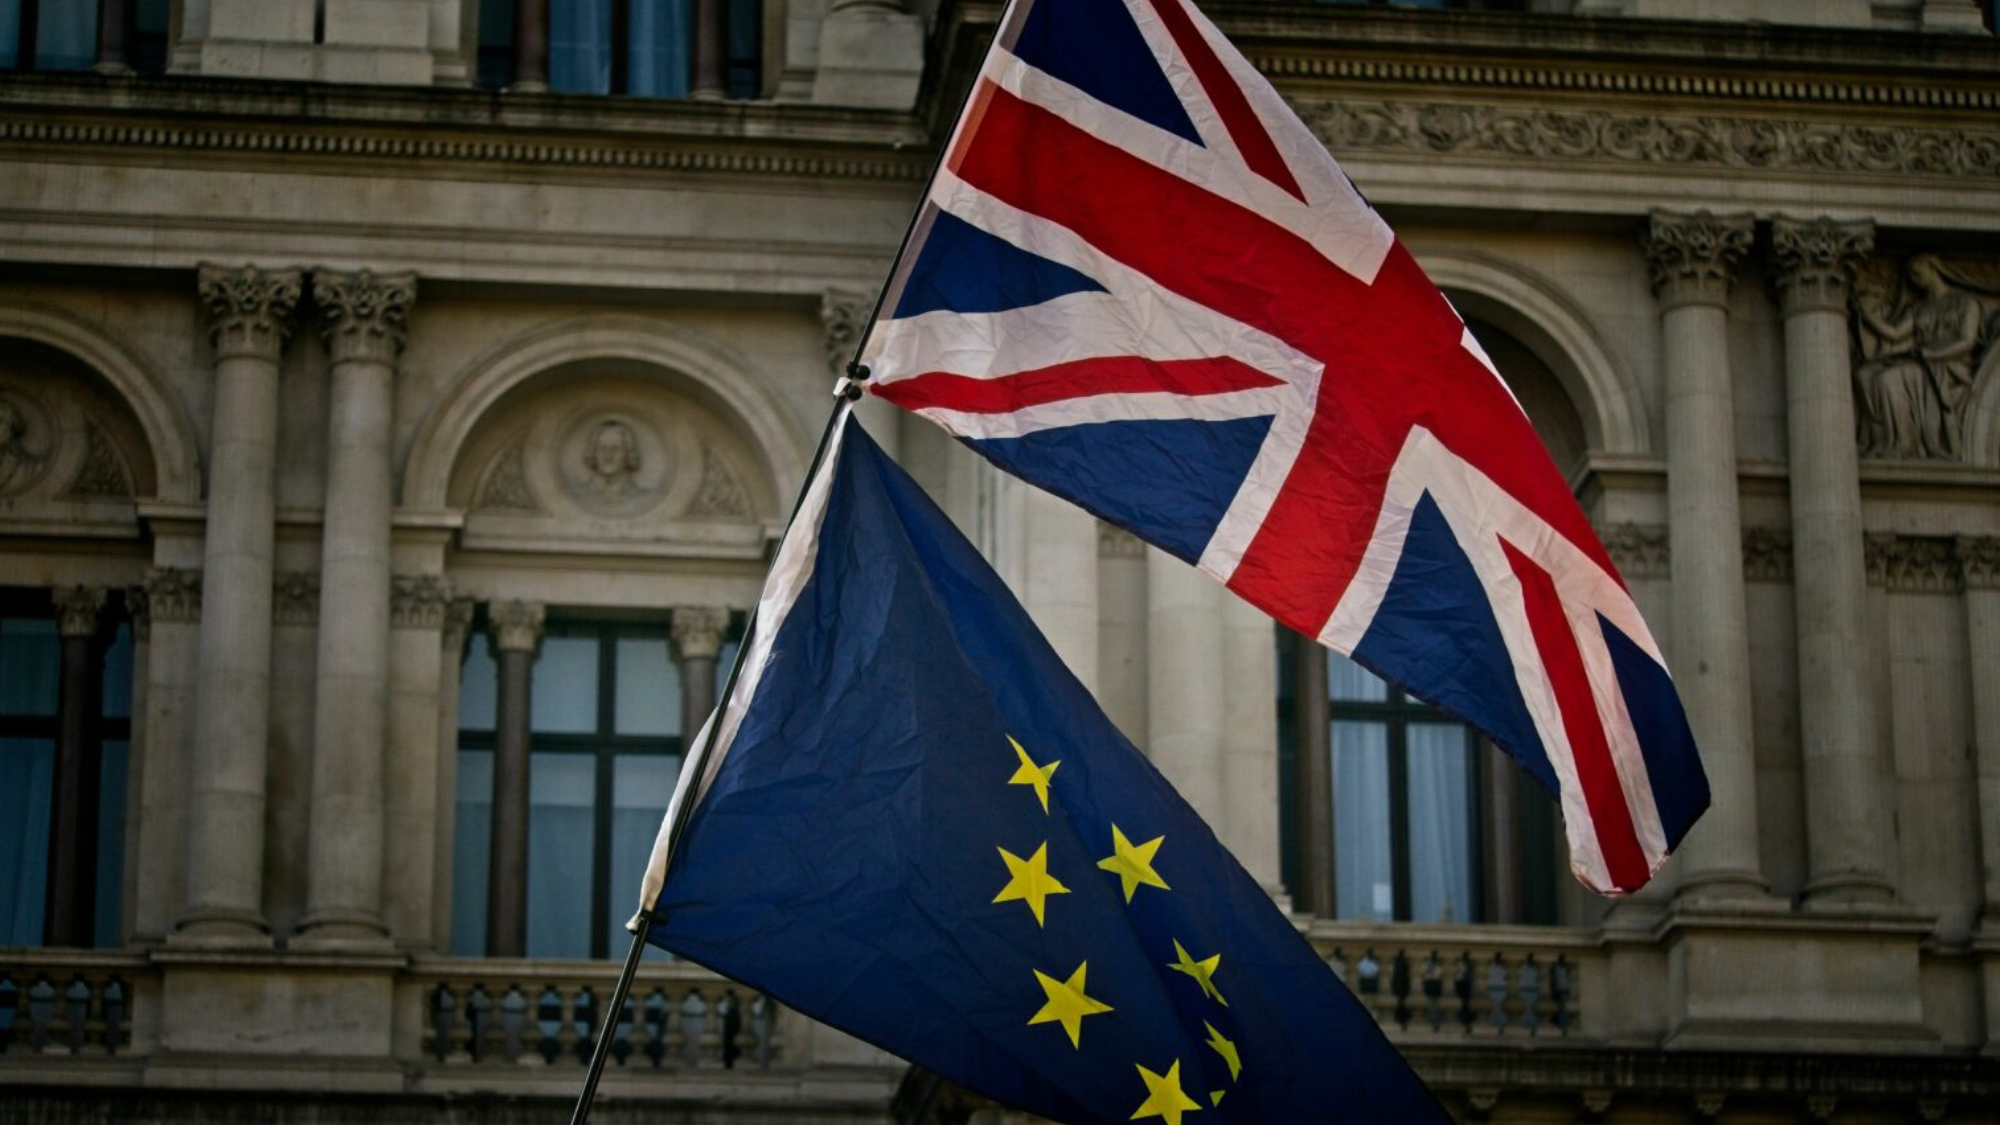 United Kingdom and European Union flags waving on a pole.